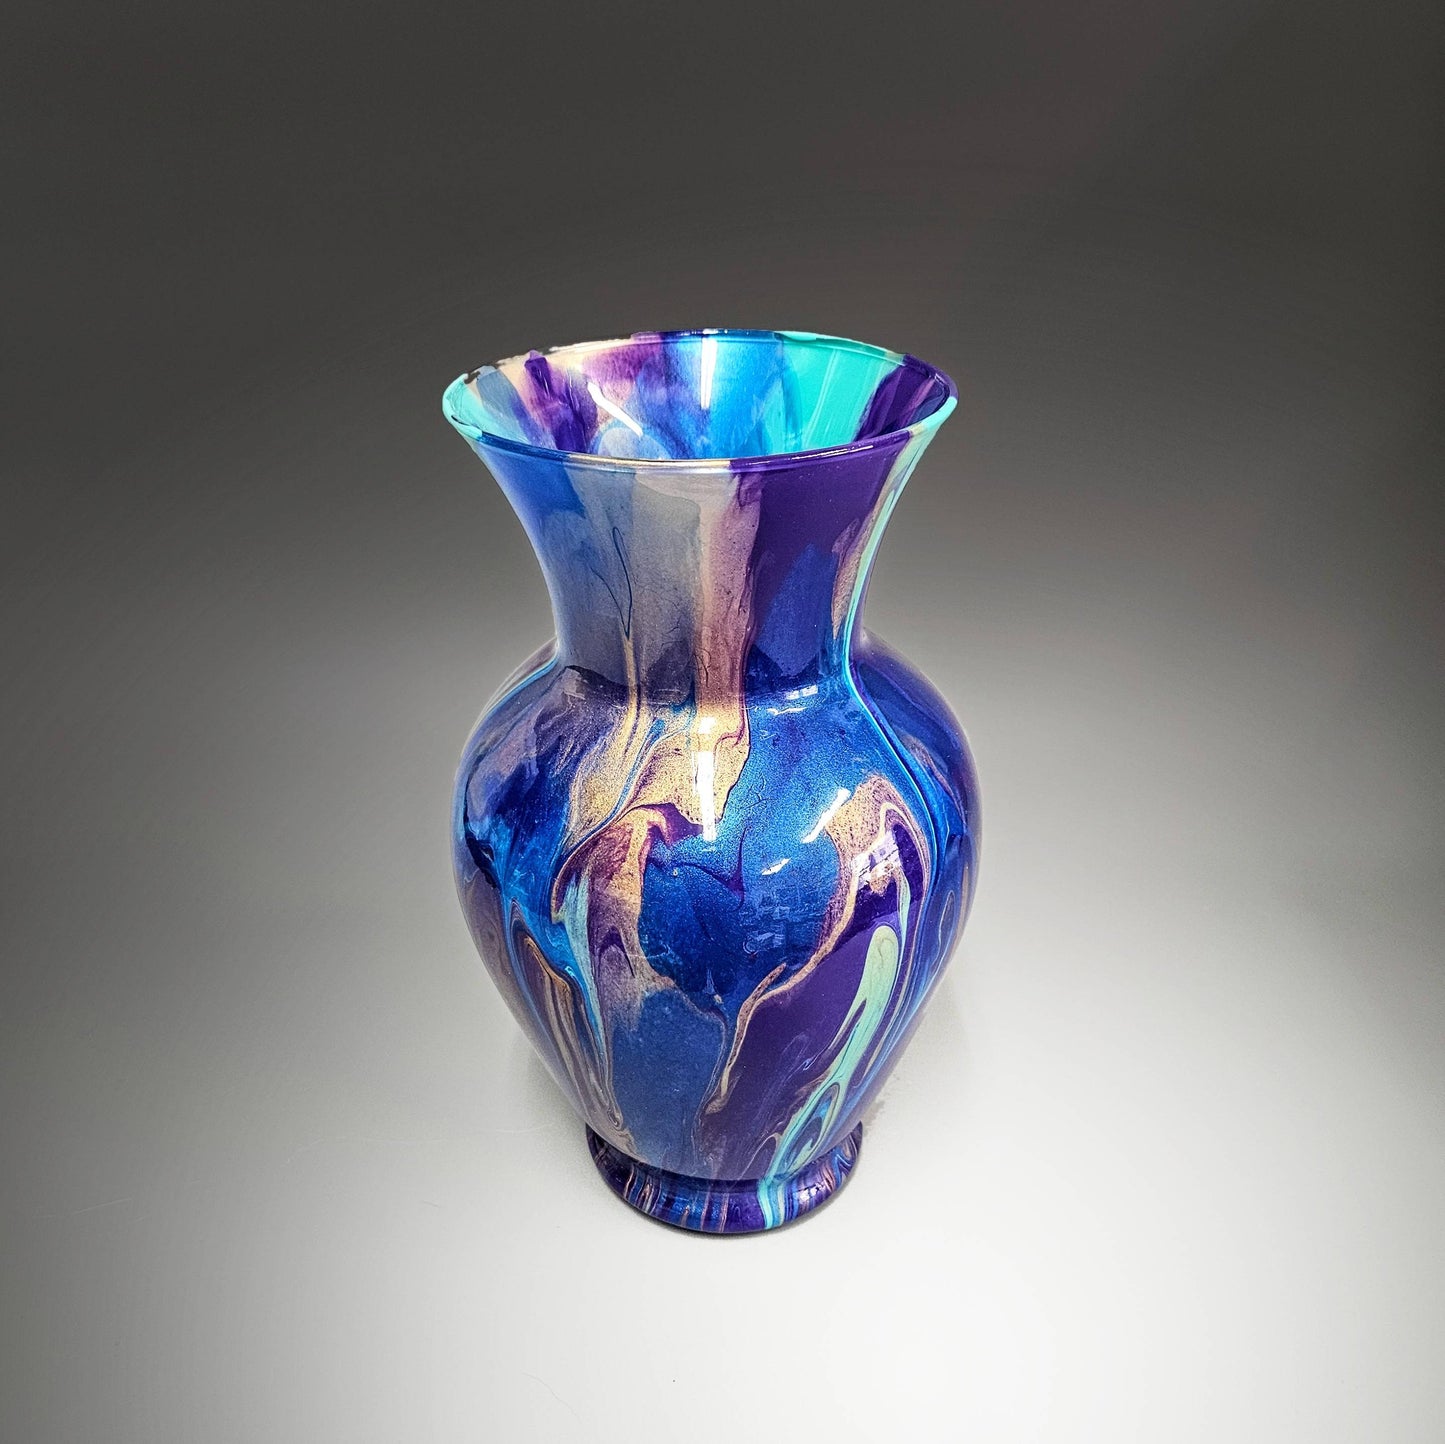 Painted Vase in Teal Aqua Purple Gold